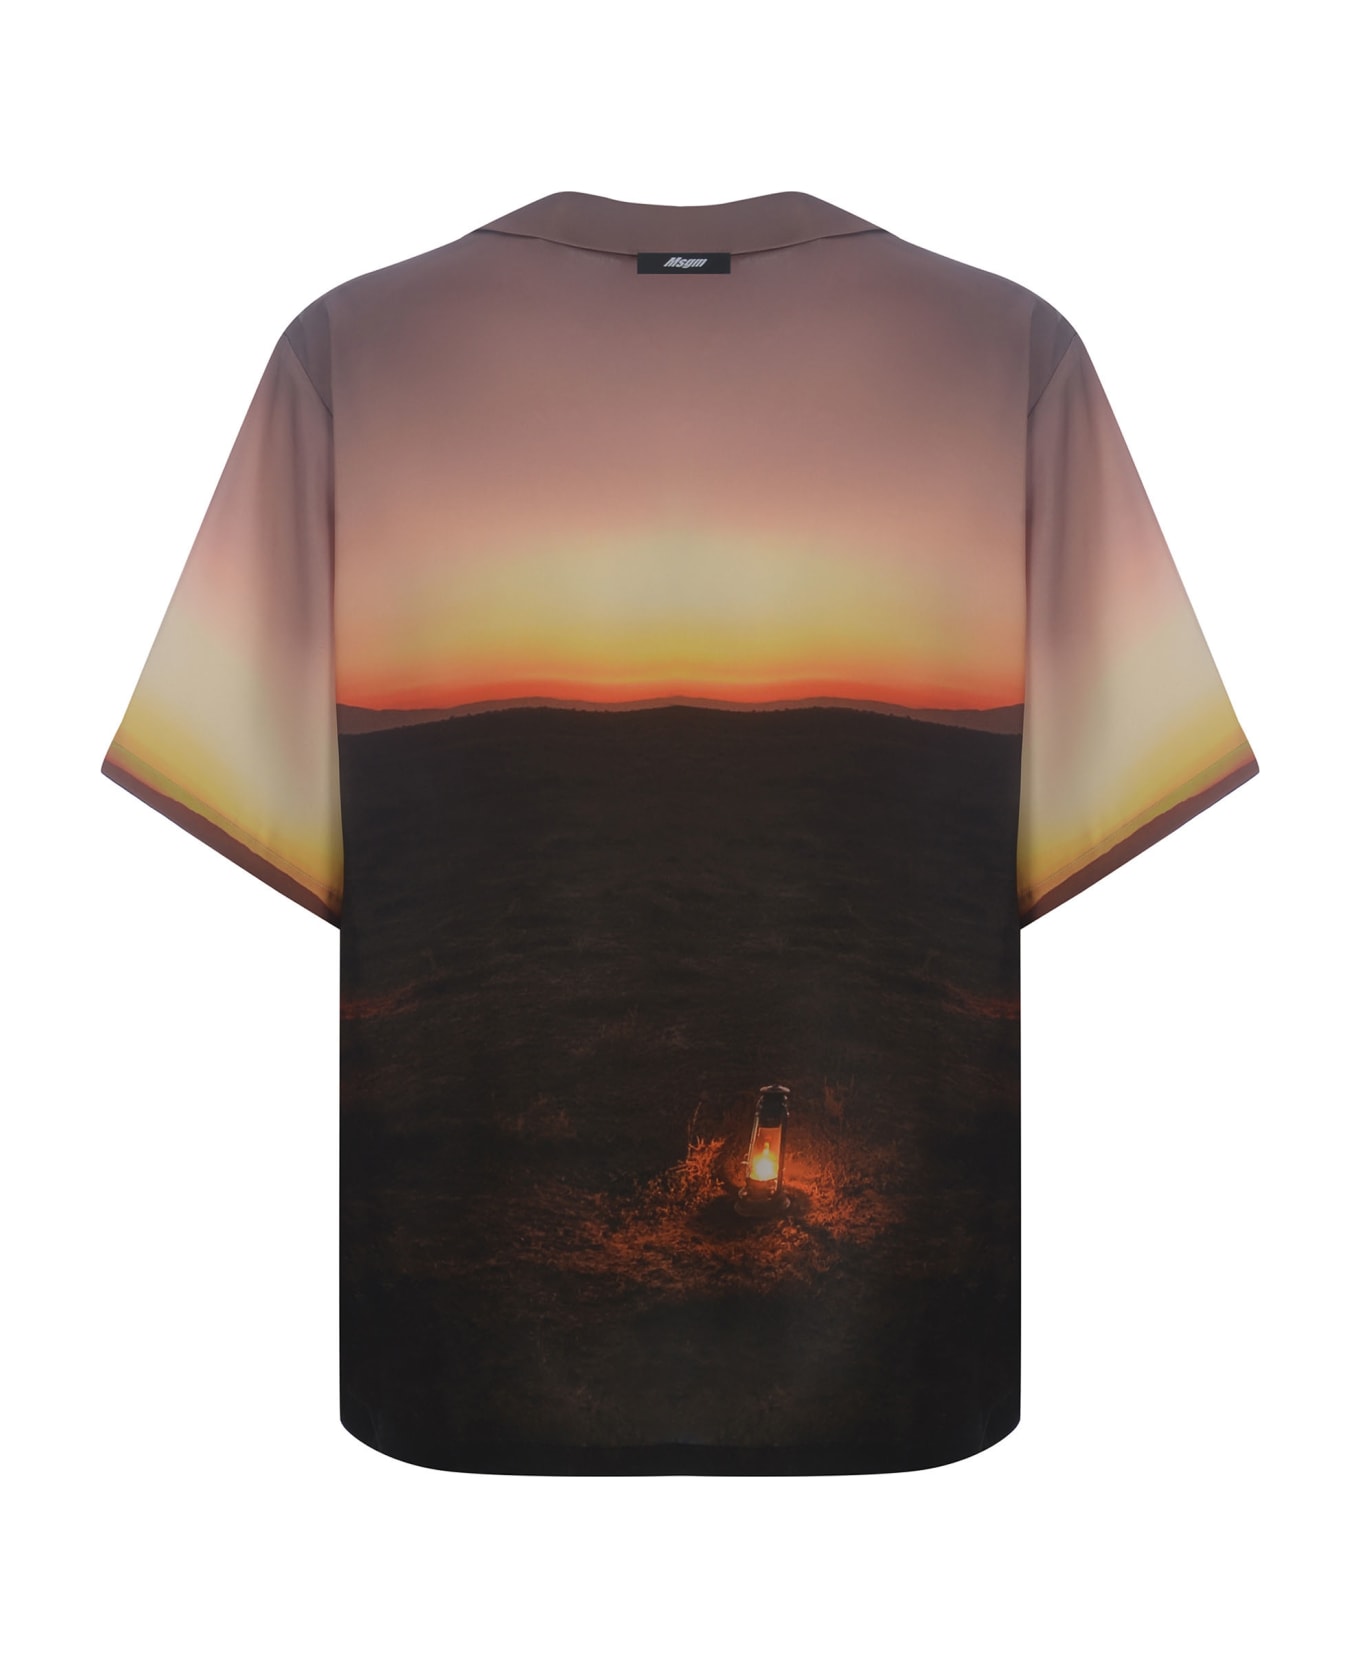 MSGM Shirt Msgm "sunset" Made Of Fluid Fabric - Multicolor シャツ